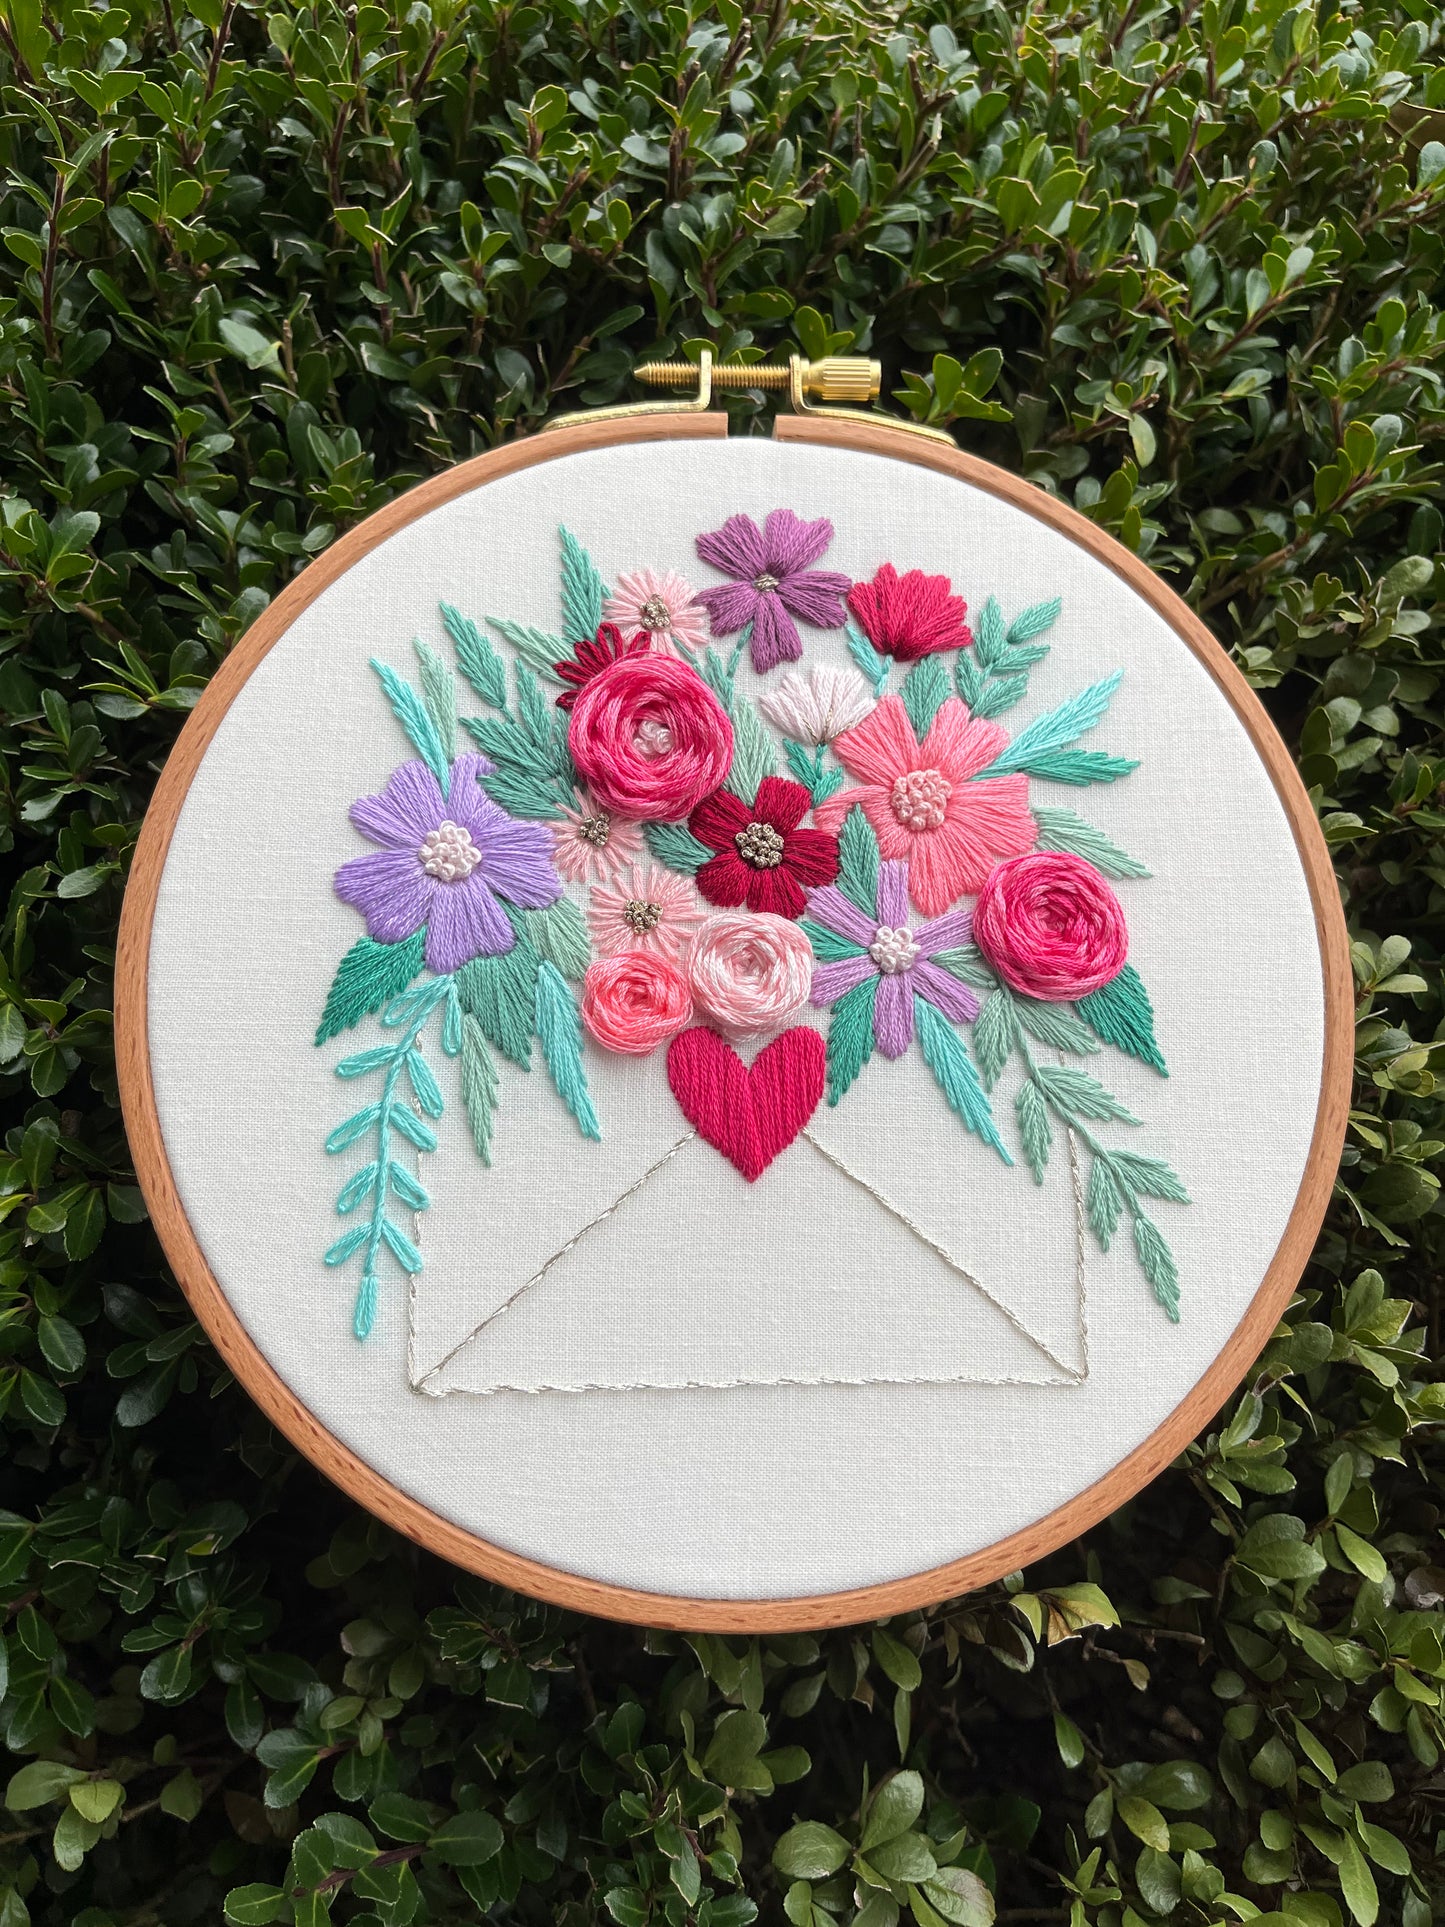 PDF Pattern - Love Letter, Intermediate Valentine's Day Floral Envelope Embroidery Pattern